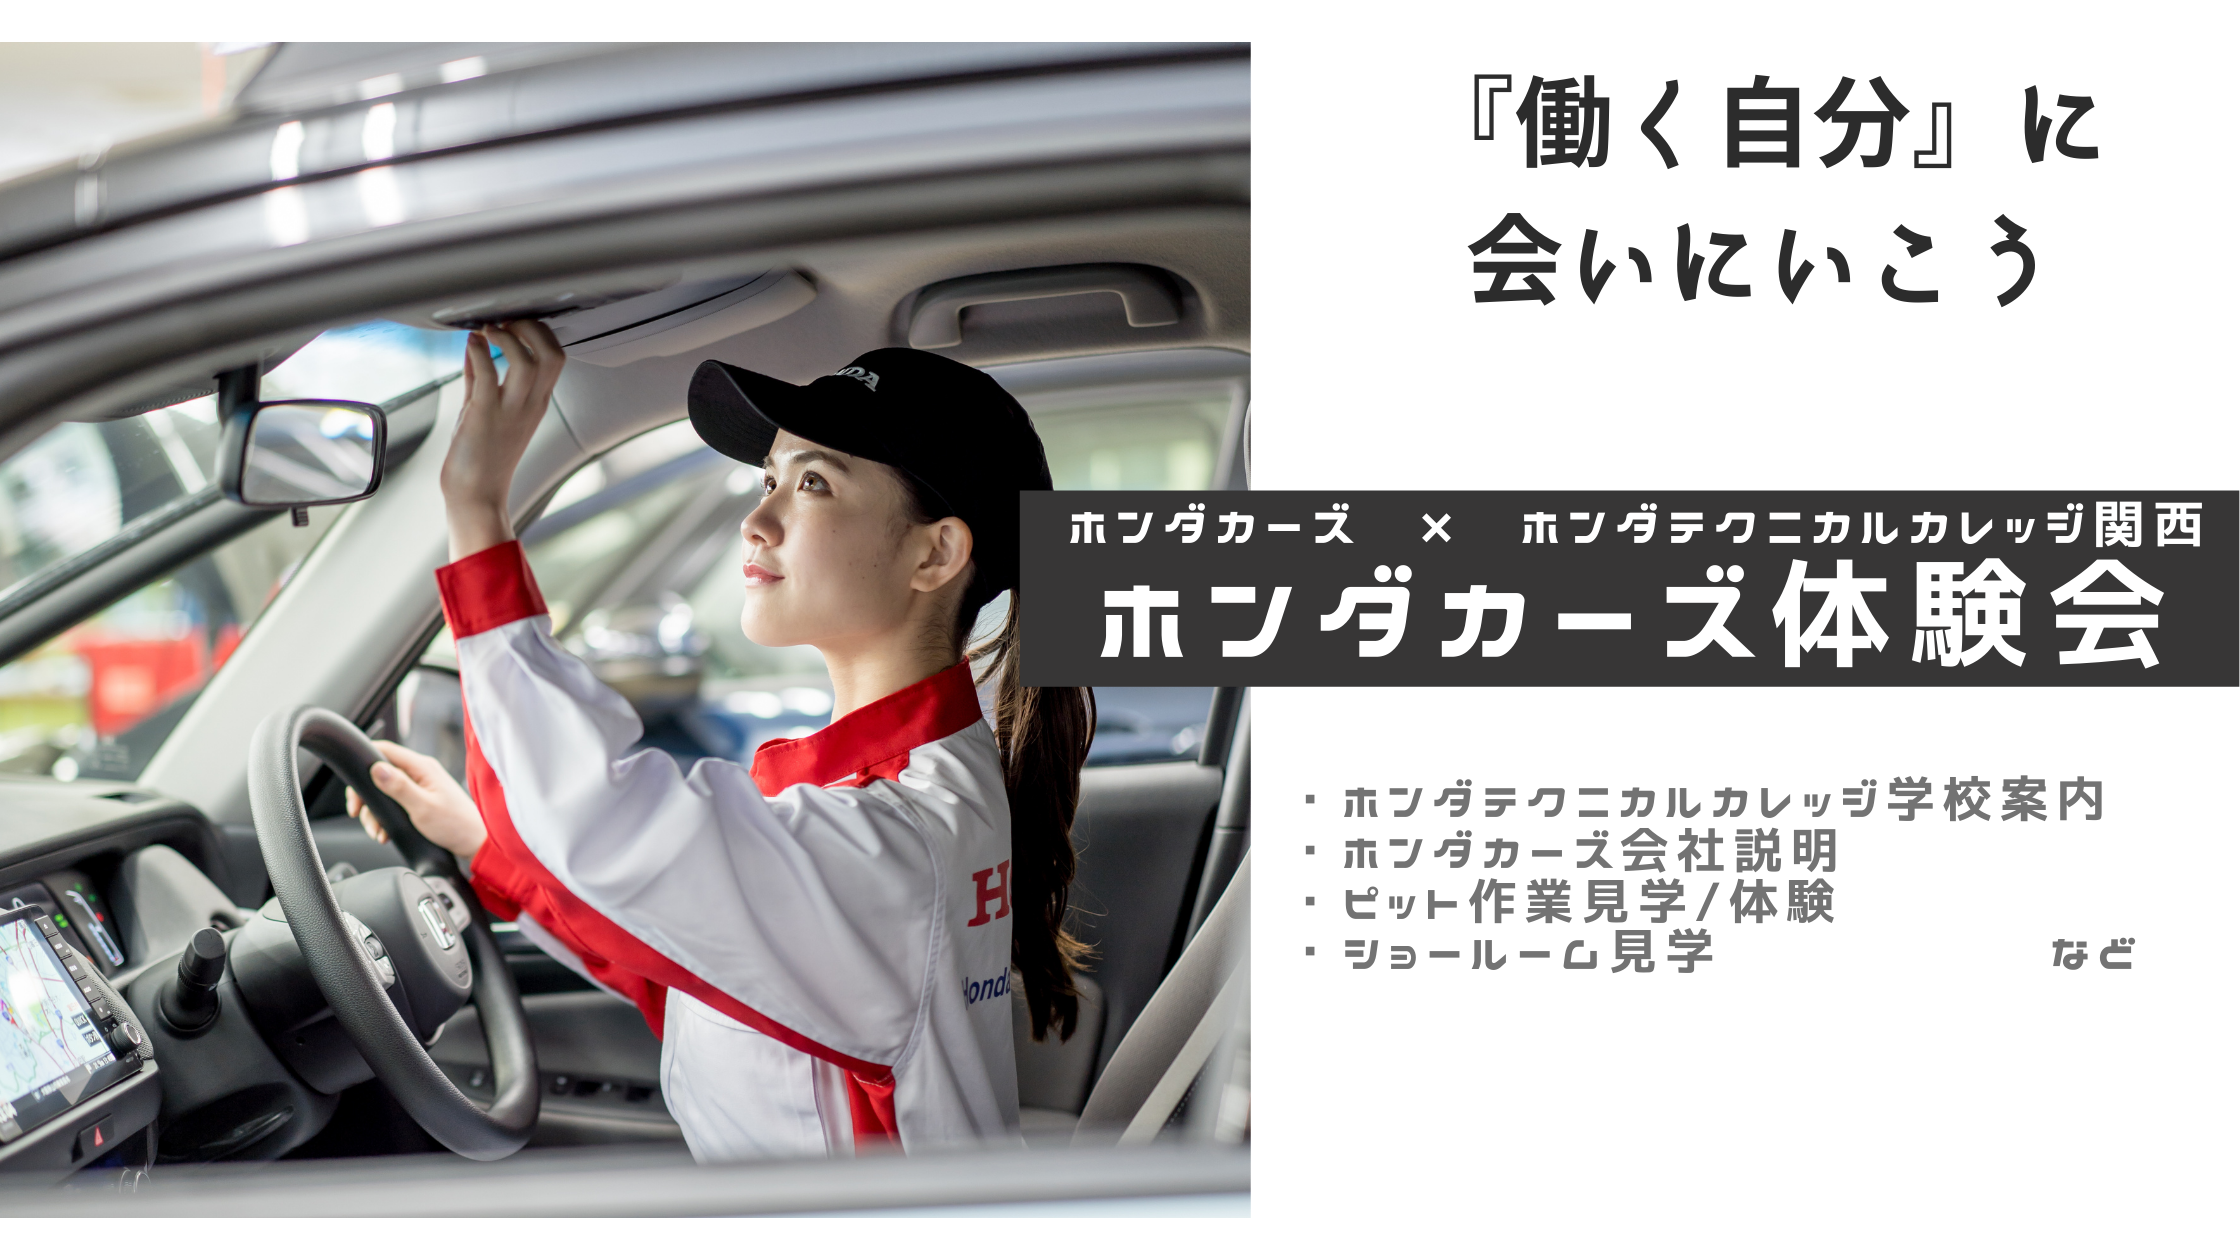 Honda Cars体験会 in 愛媛(5/7)